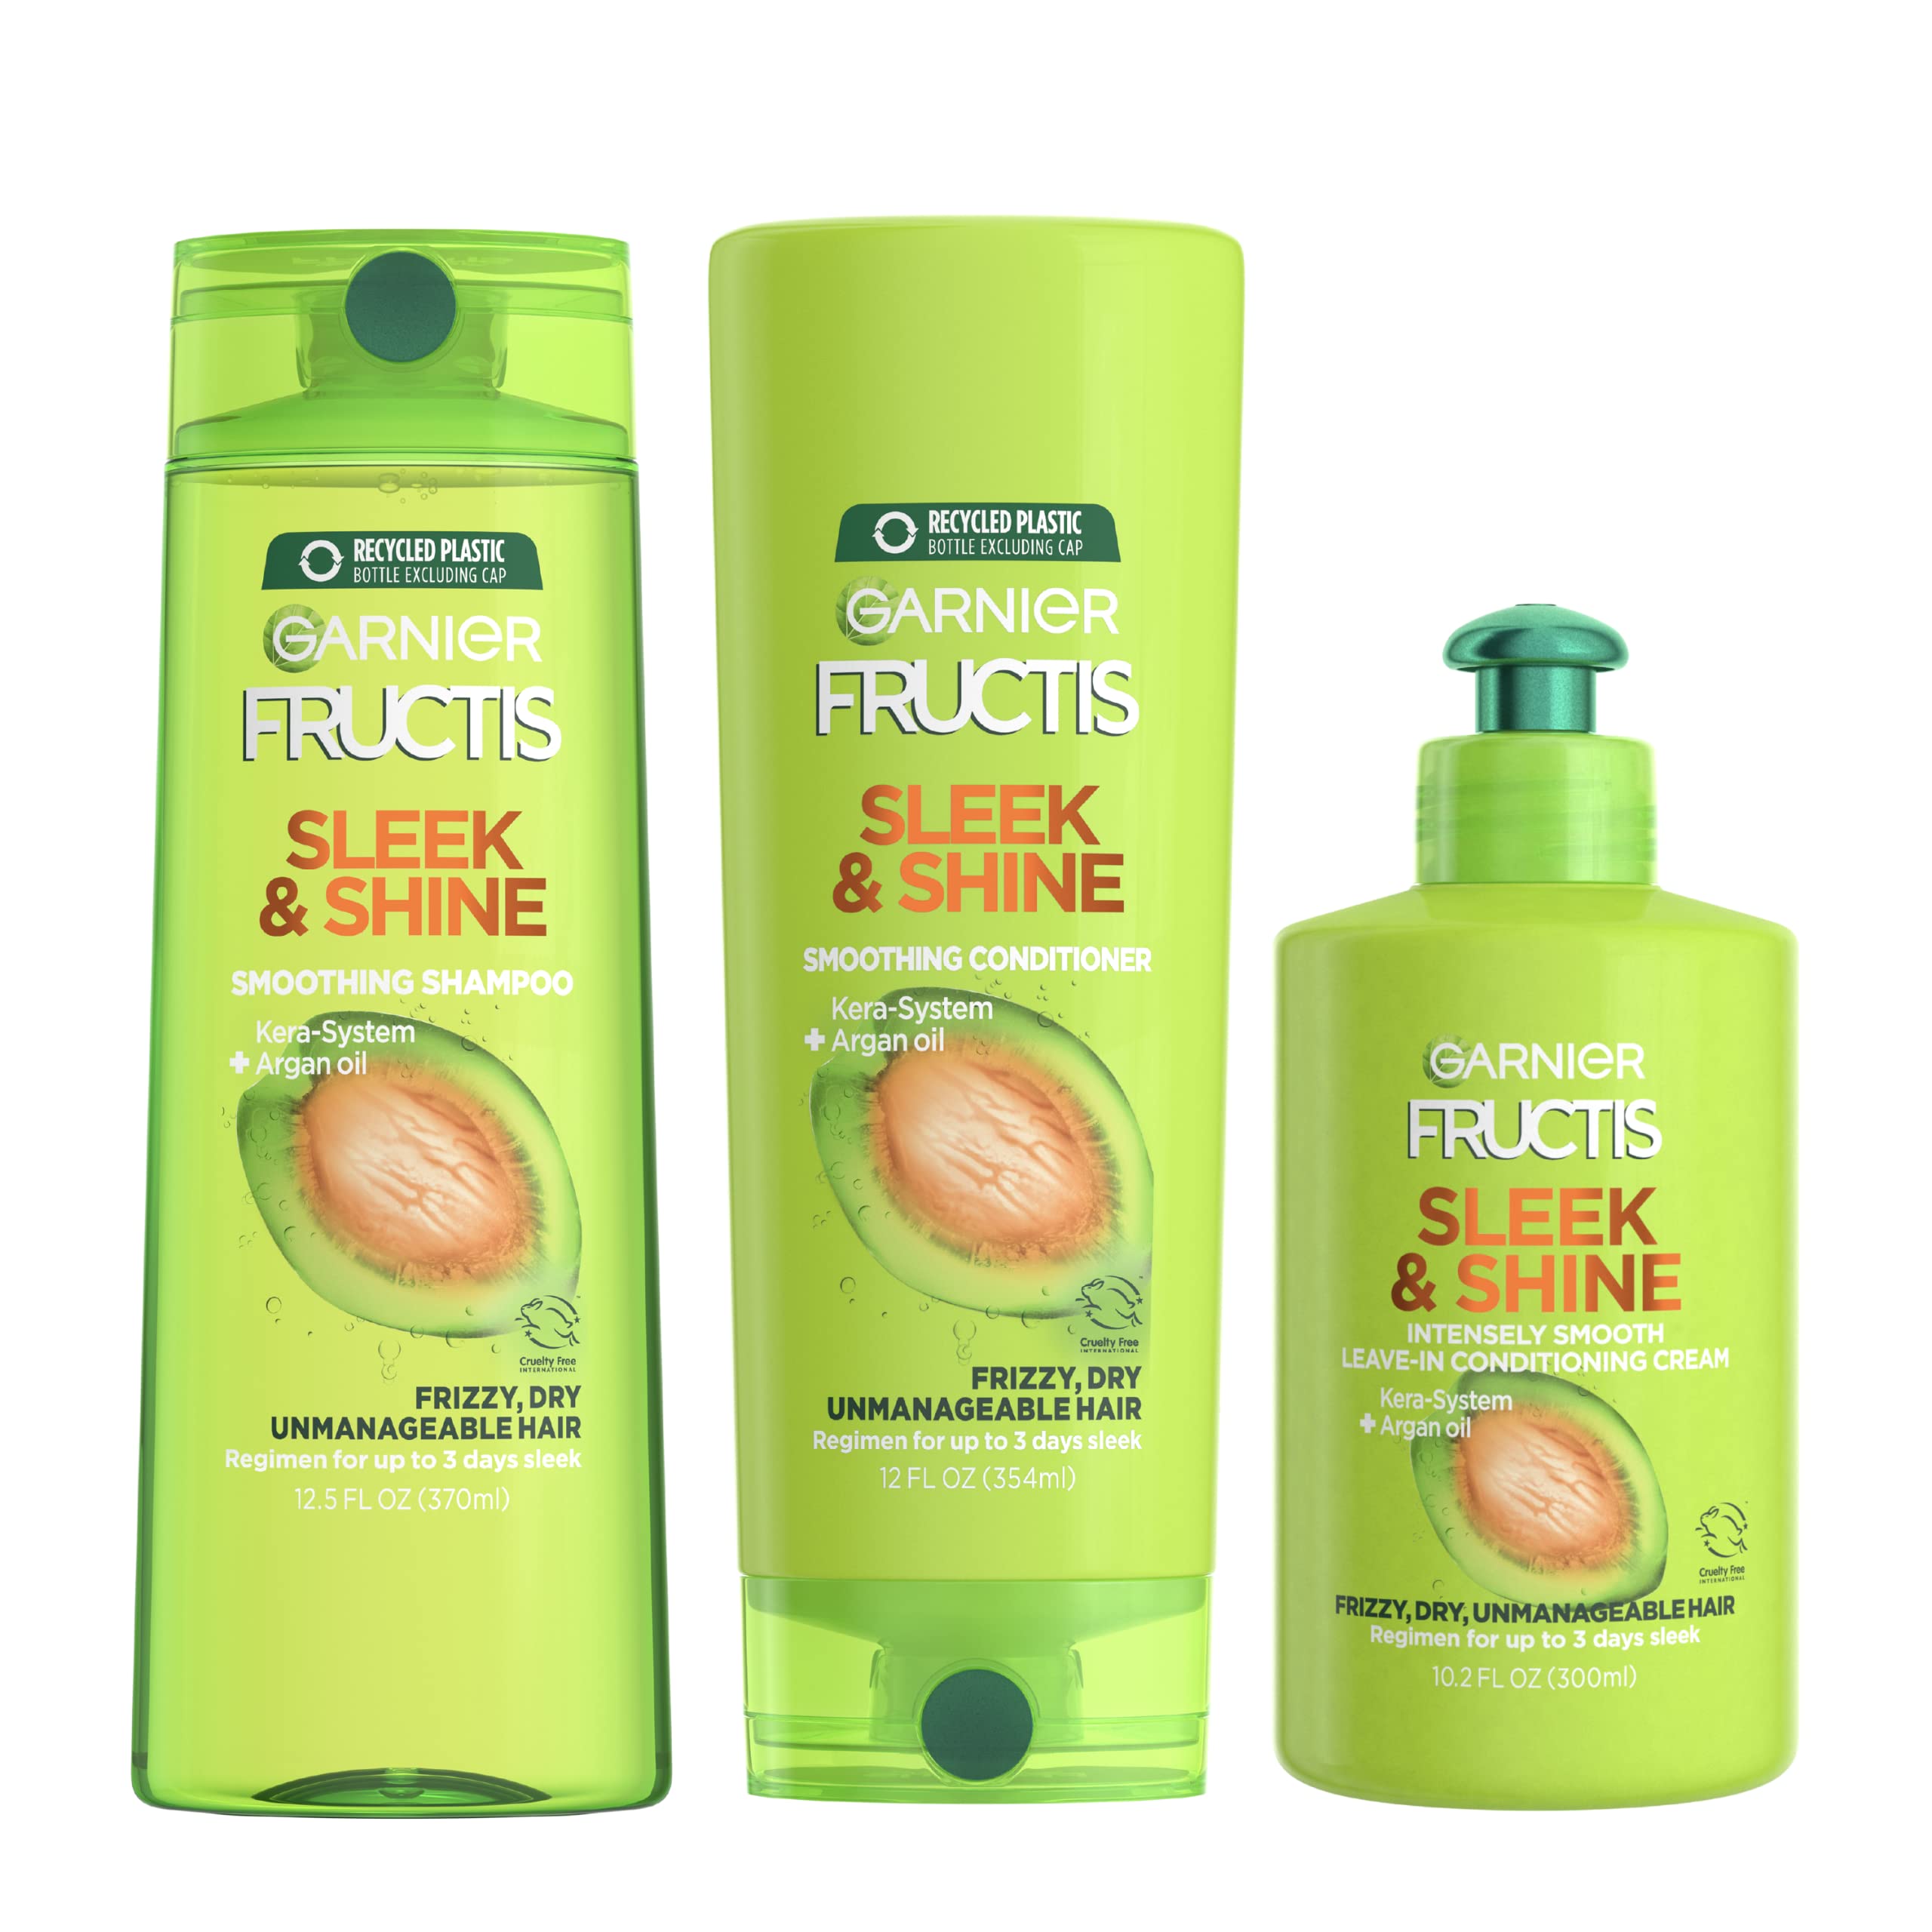 Mua Garnier Fructis Sleek & Shine Shampoo, Conditioner & Leave-In  Conditioning Cream Kit, For Frizzy, Dry Hair, 1 Kit (Packaging May Vary)  trên Amazon Mỹ chính hãng 2023 | Giaonhan247